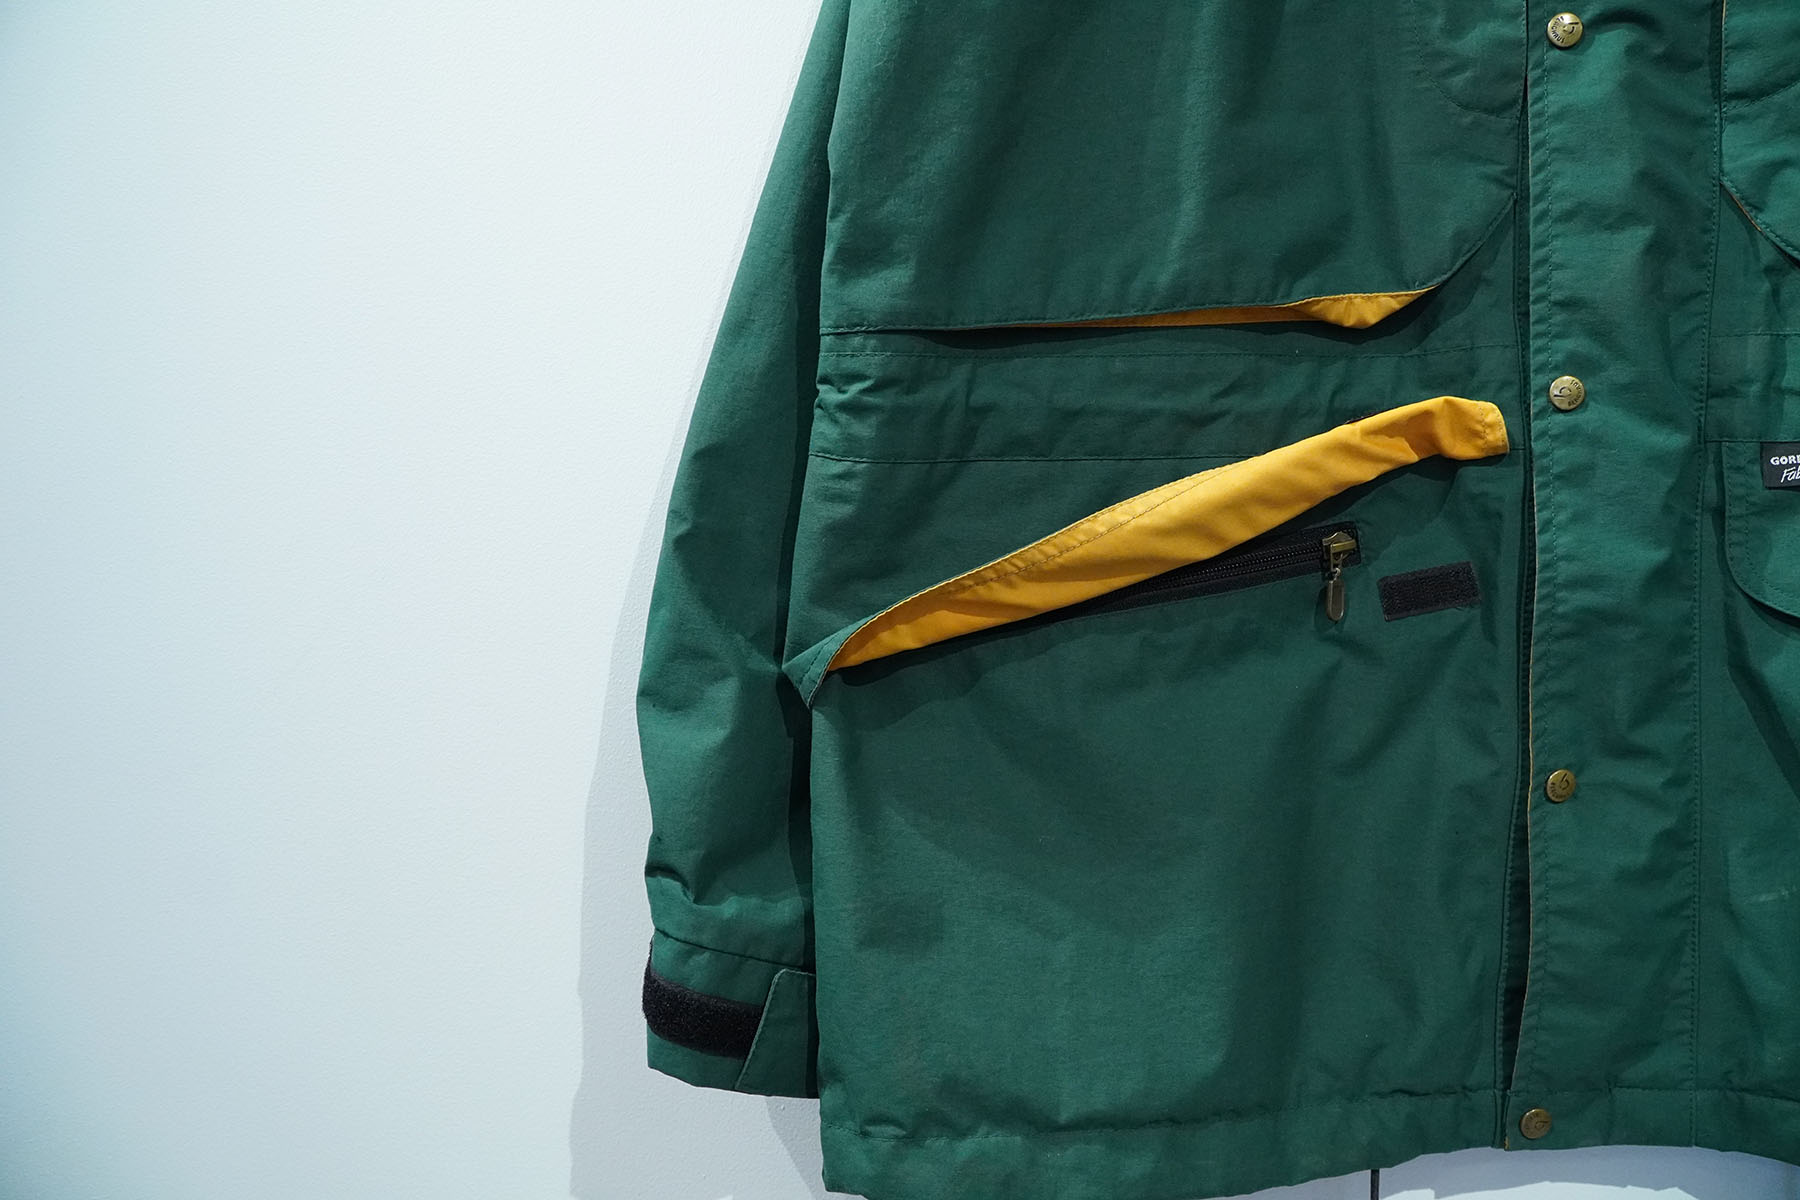 80s vintage berghaus goretex jacket -green color- flap pocket with zipper